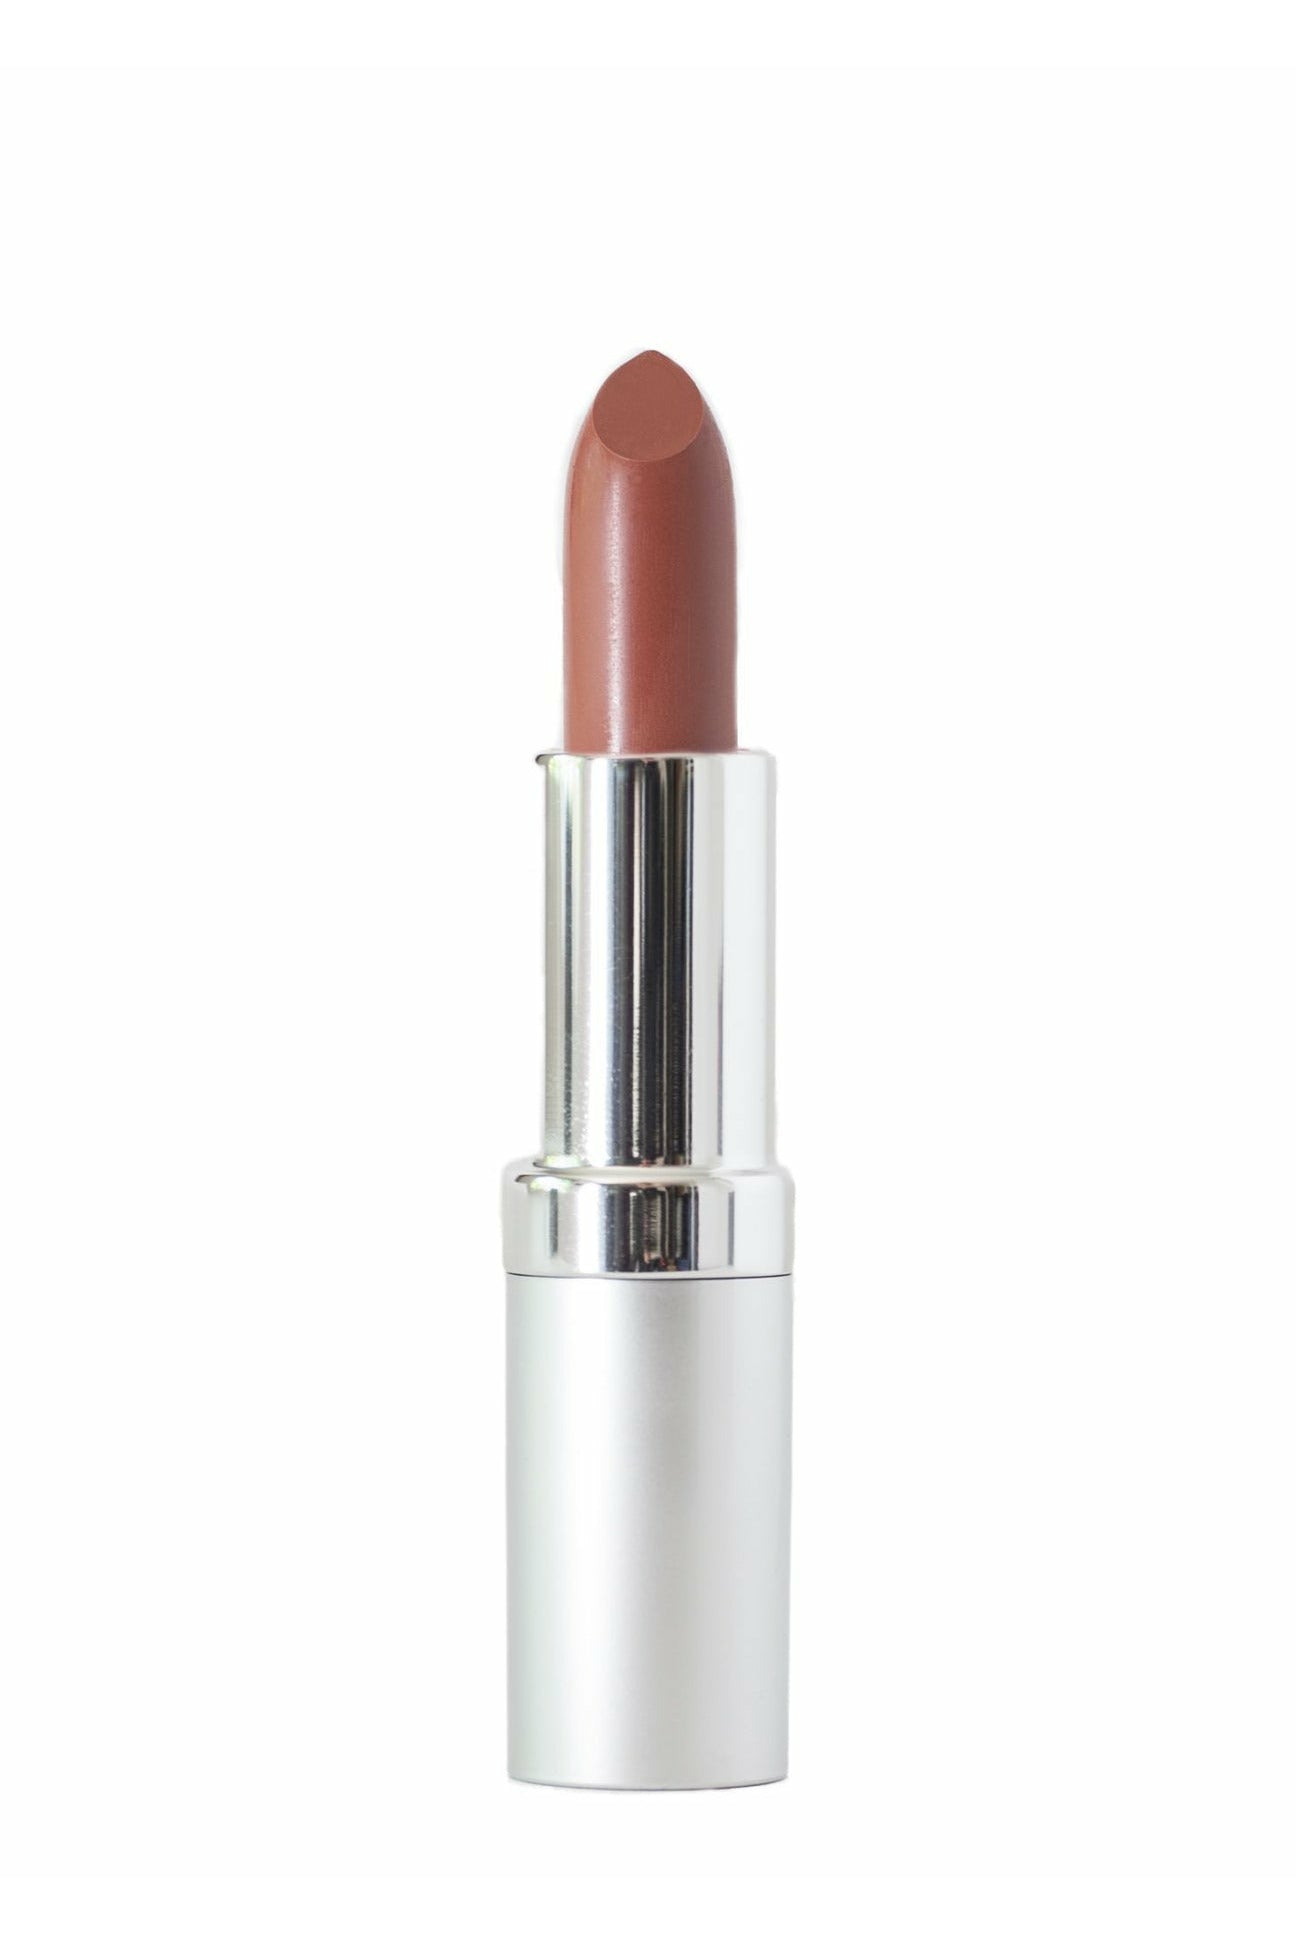 REB Cosmetics Lipstick in Chocolate Coat